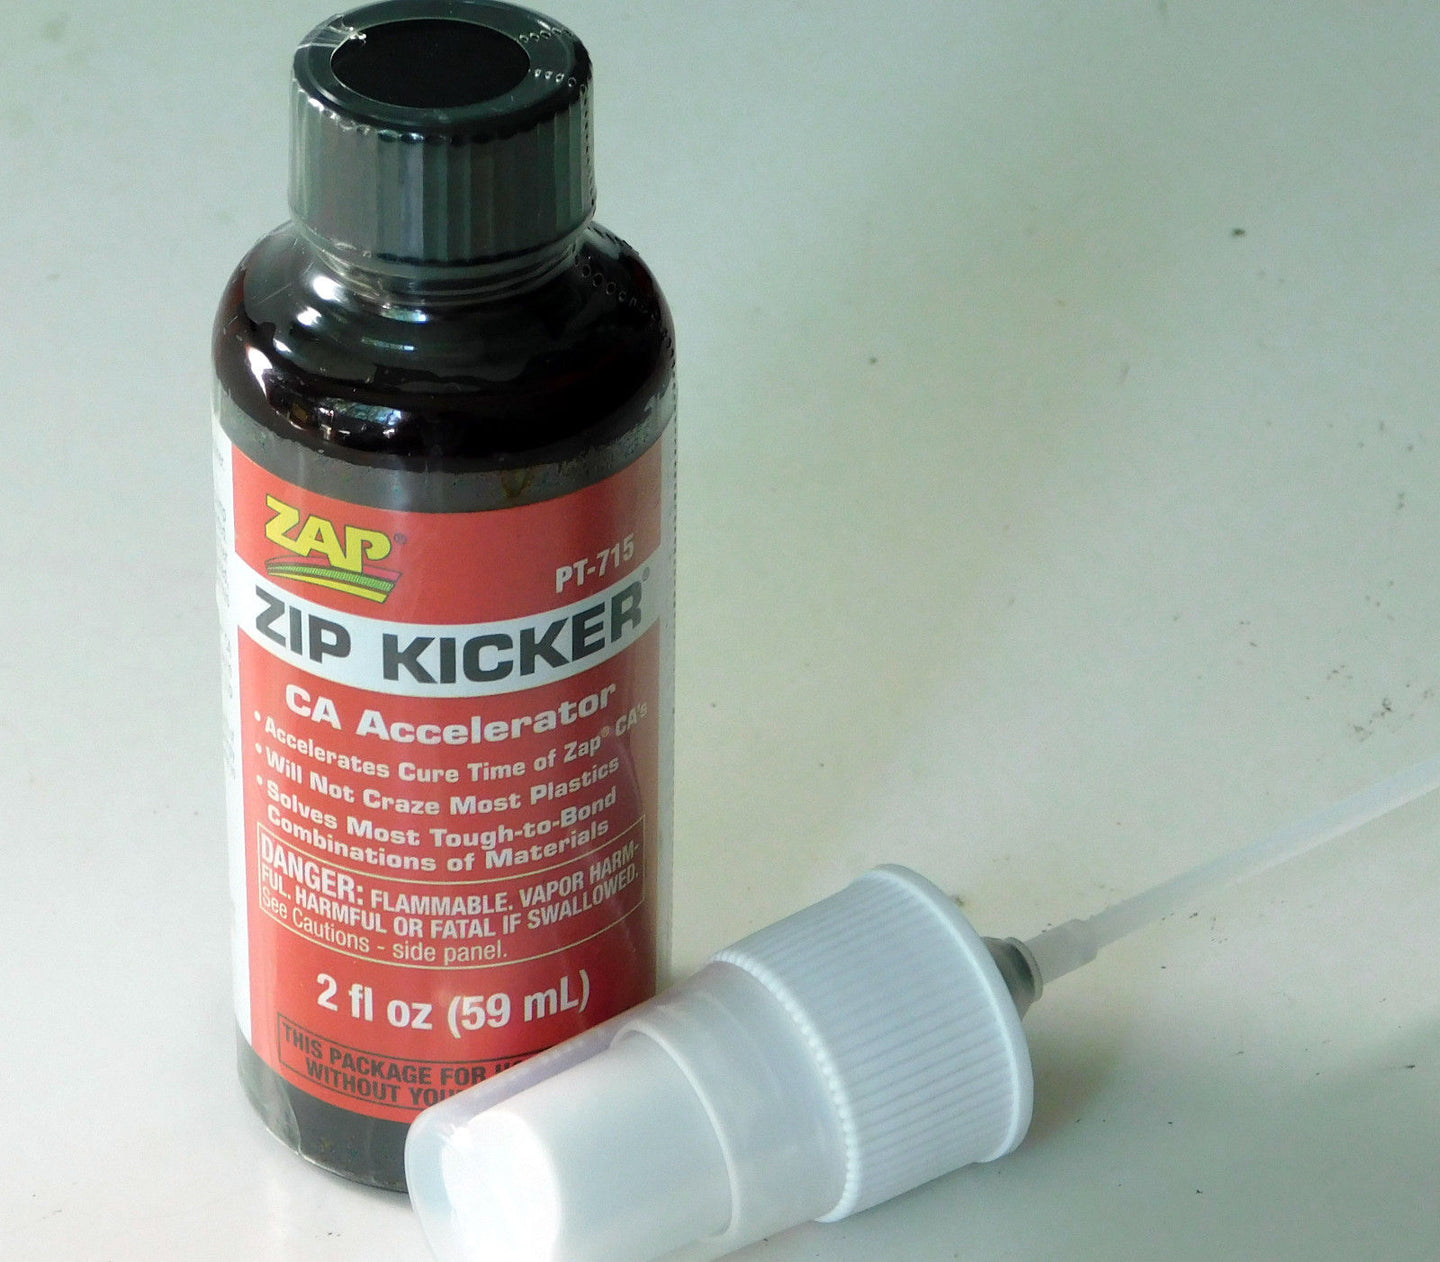 Pacer PT715 Zip Kicker Accelerator for CA Glue (Pump Bottle) 2oz